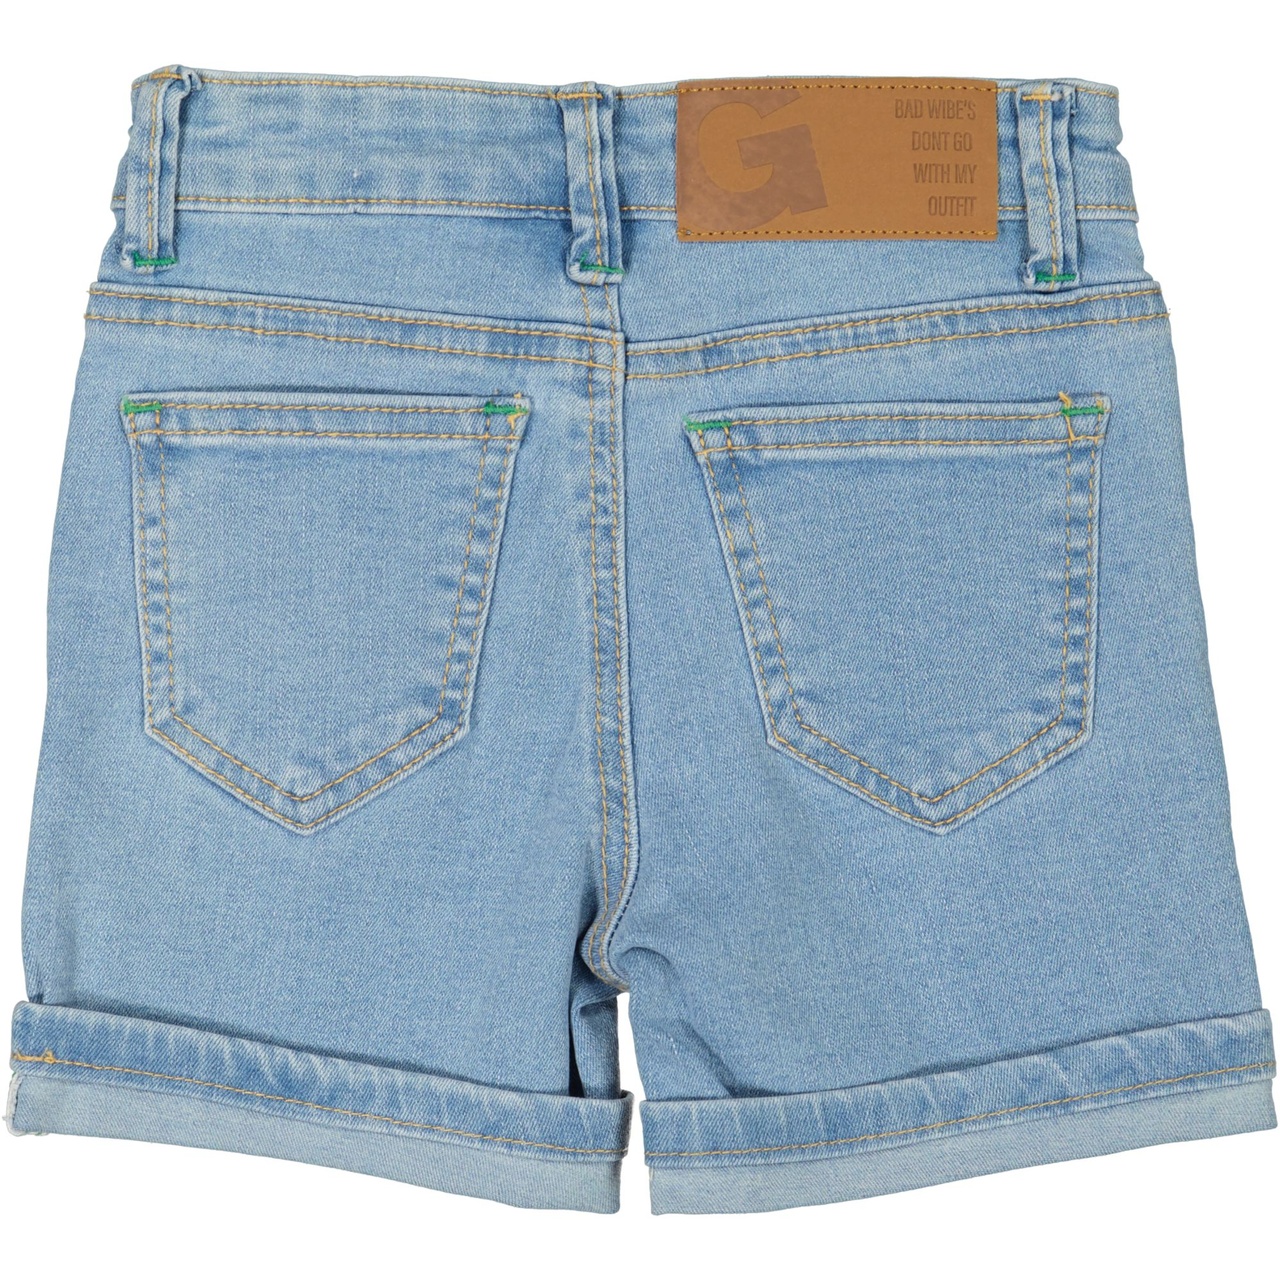 Unisex 5-pocket shorts Denim l.blue wash 146/152